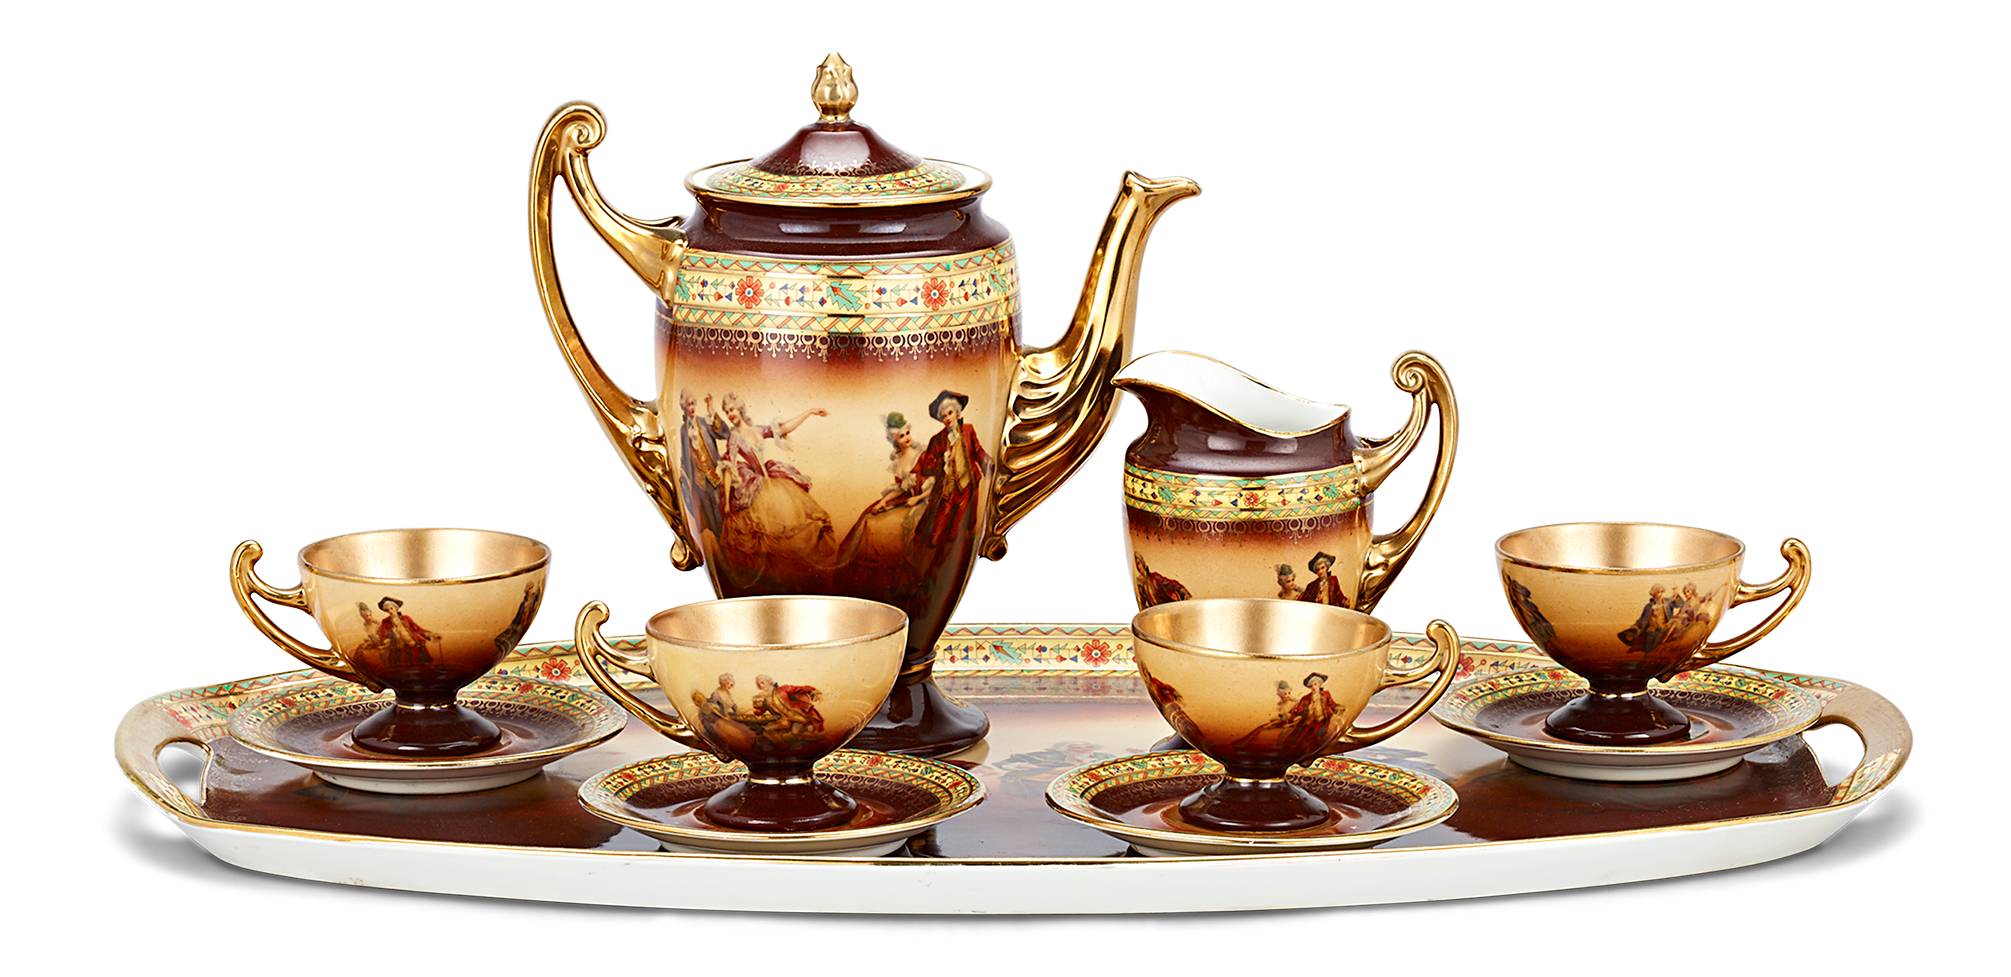 Tea Set with Cups PNG Transparent